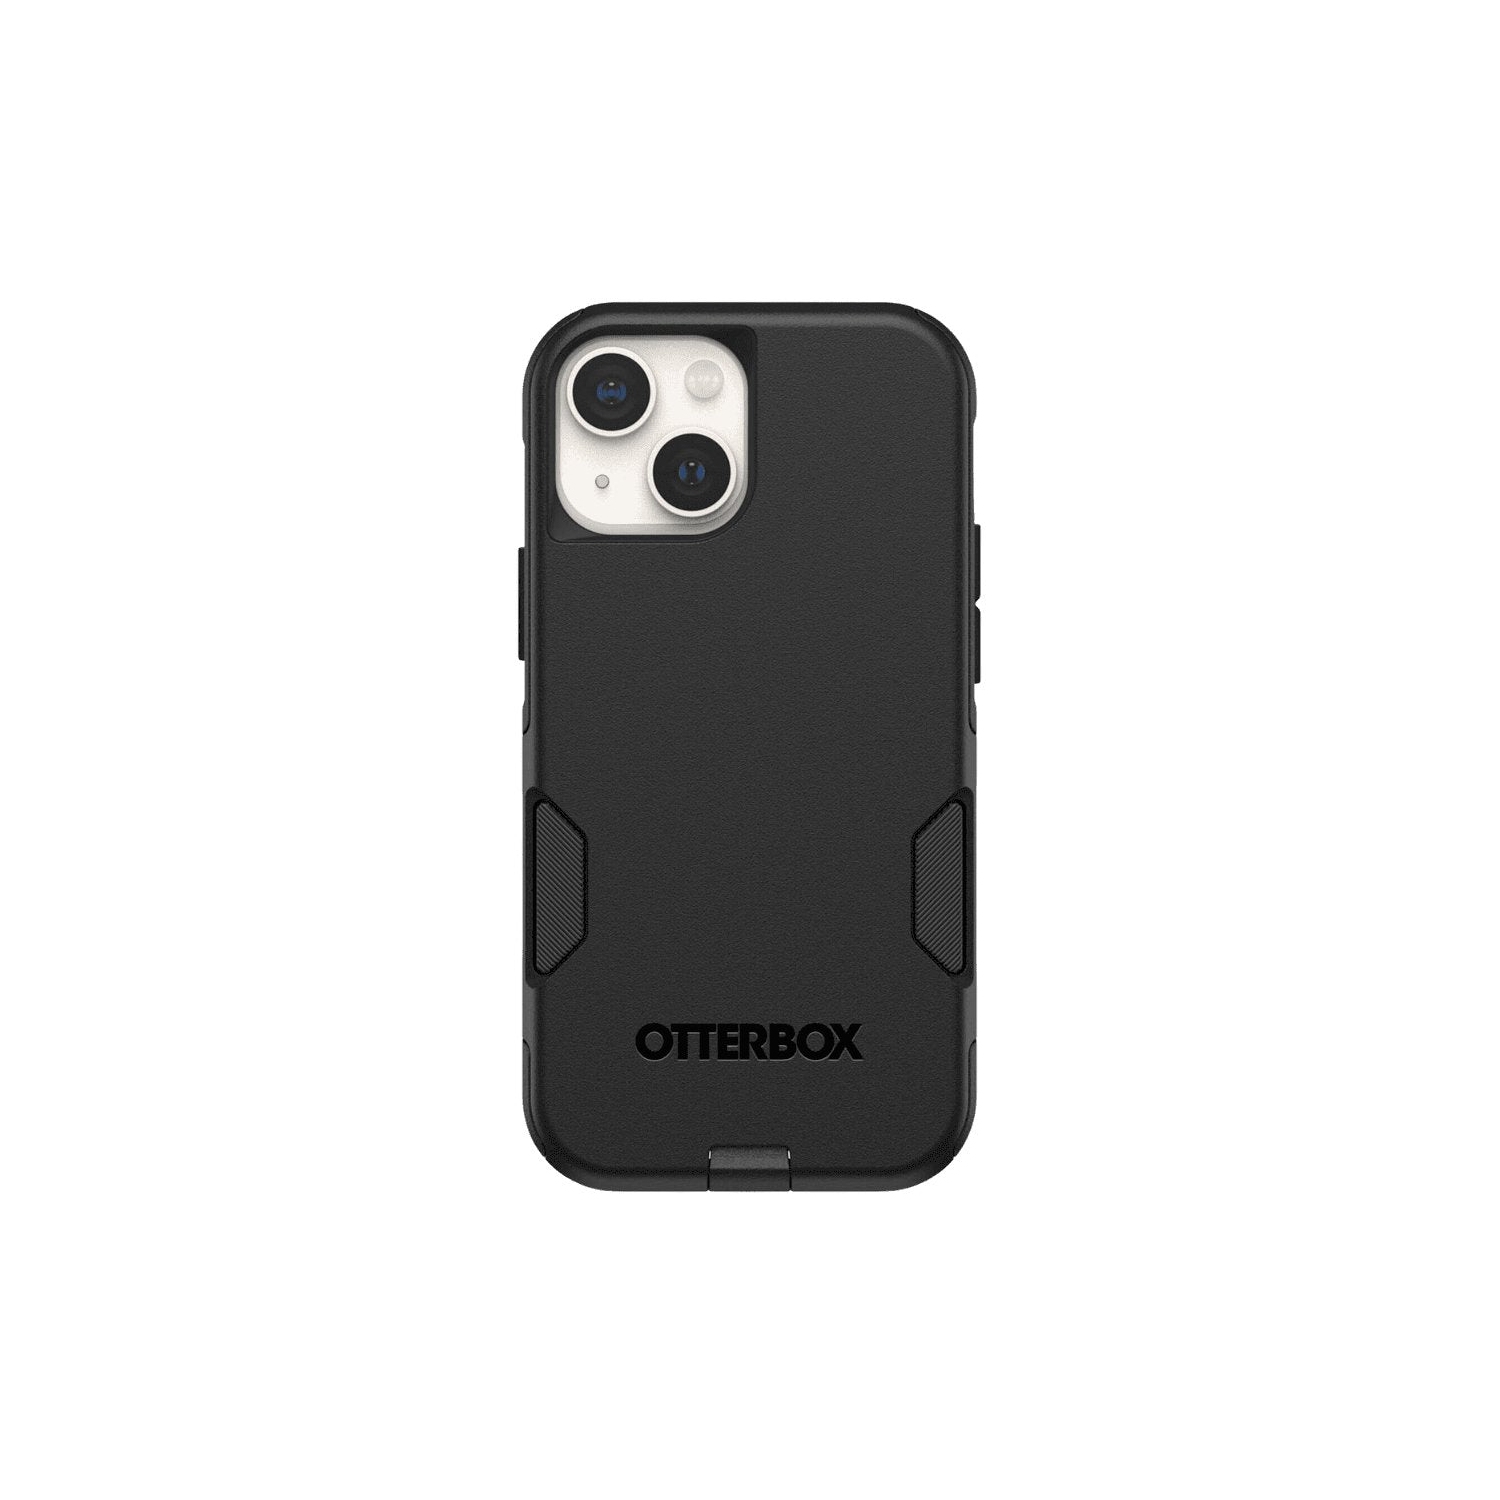 Refurbished (Good) - Otterbox Symmetry Case For iPhone 12 Mini - Black